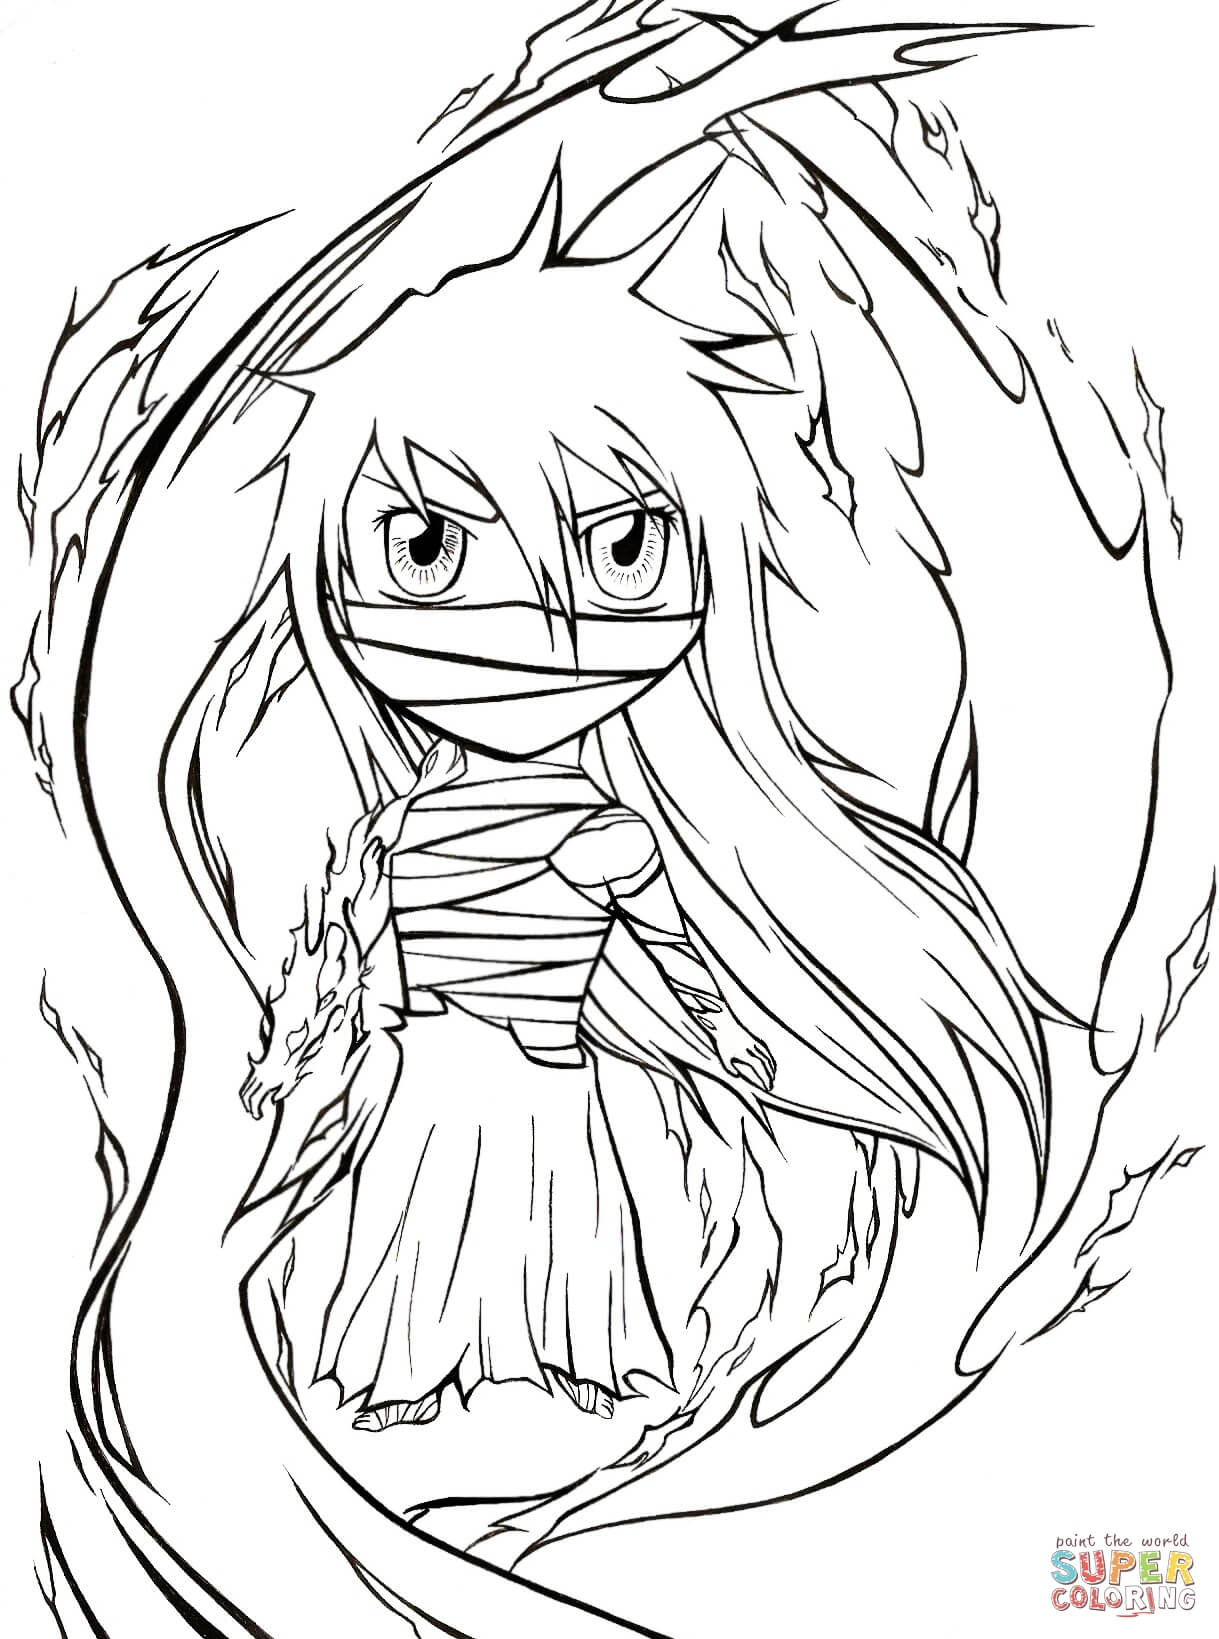 Chibi Mugetsu from Manga Bleach coloring page | Free Printable ...